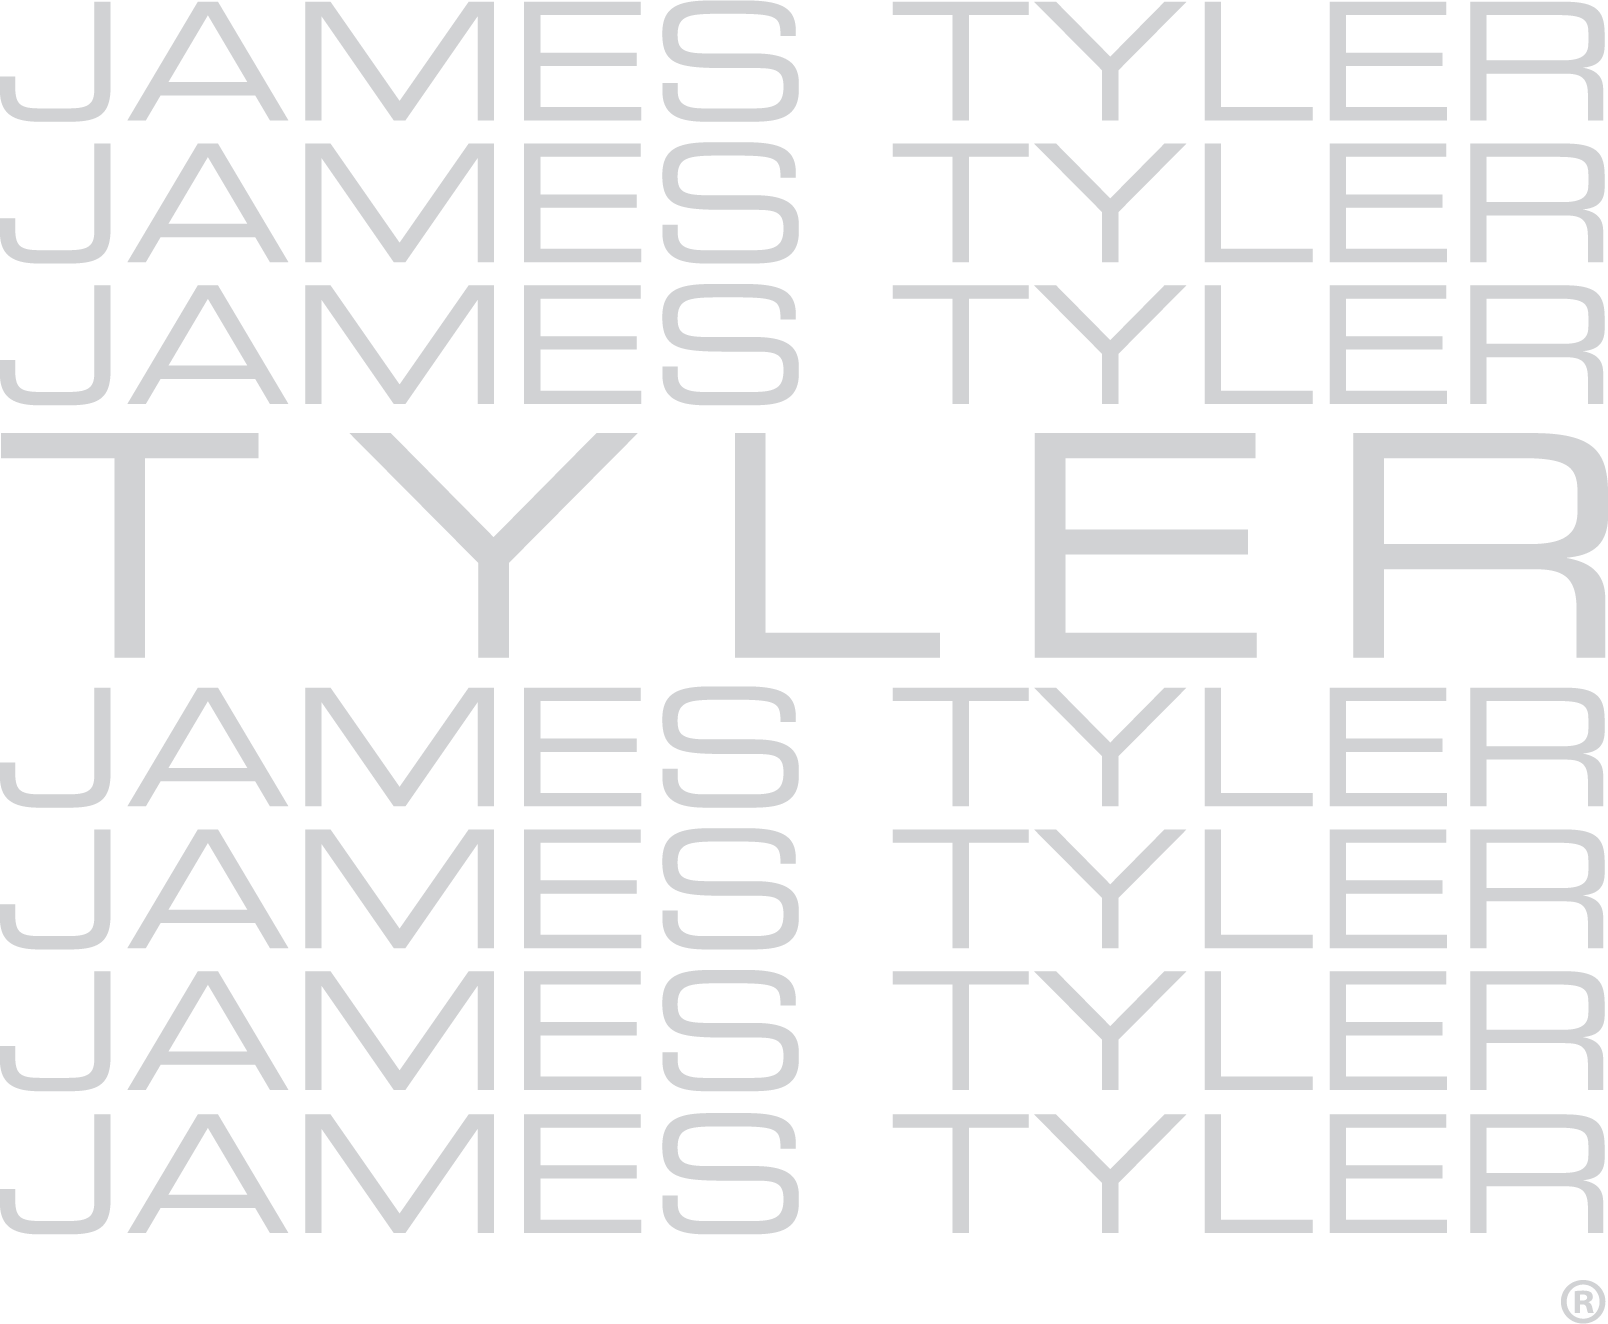 James Tyler Guitars